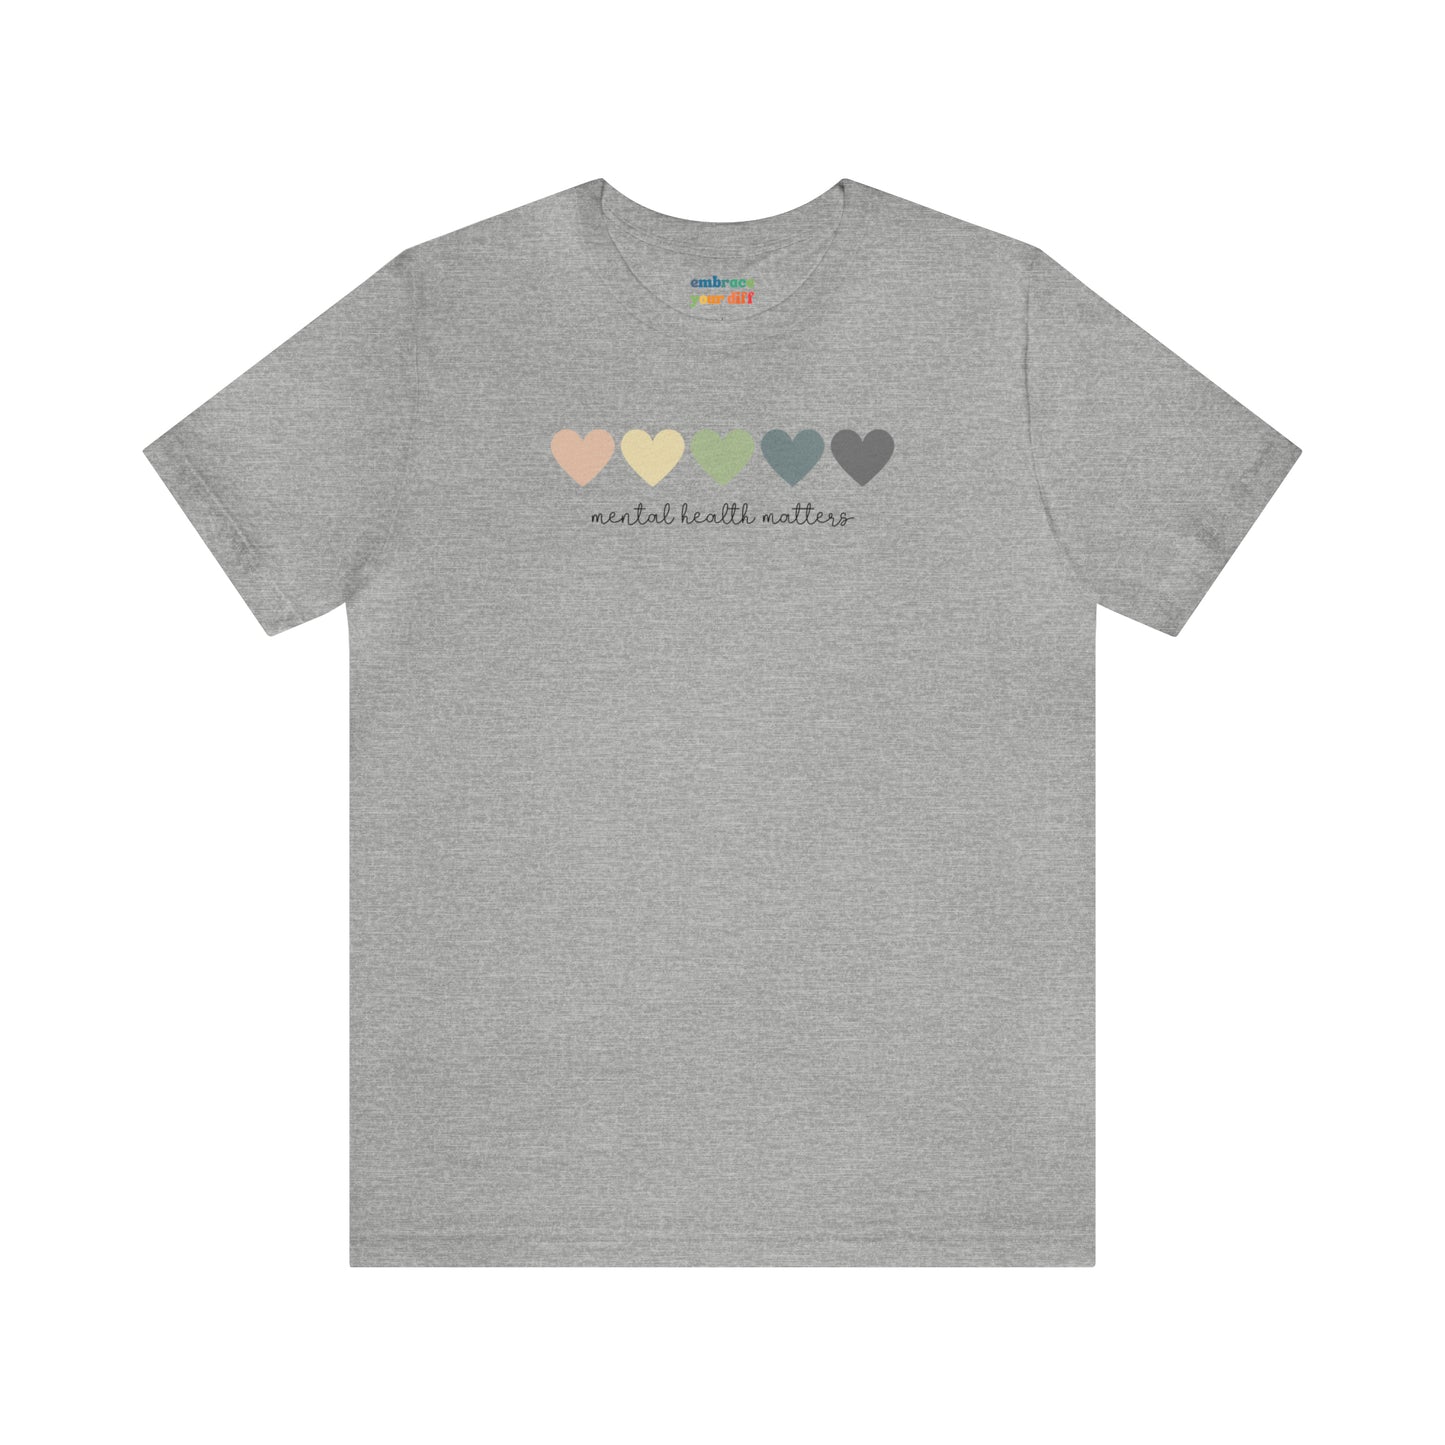 Pastel Rainbow Unisex T-shirt for Mental Health Acceptance - Adult Inclusivity Matters - Diversity Acceptance Shirt for Adults - Embrace Your Diff